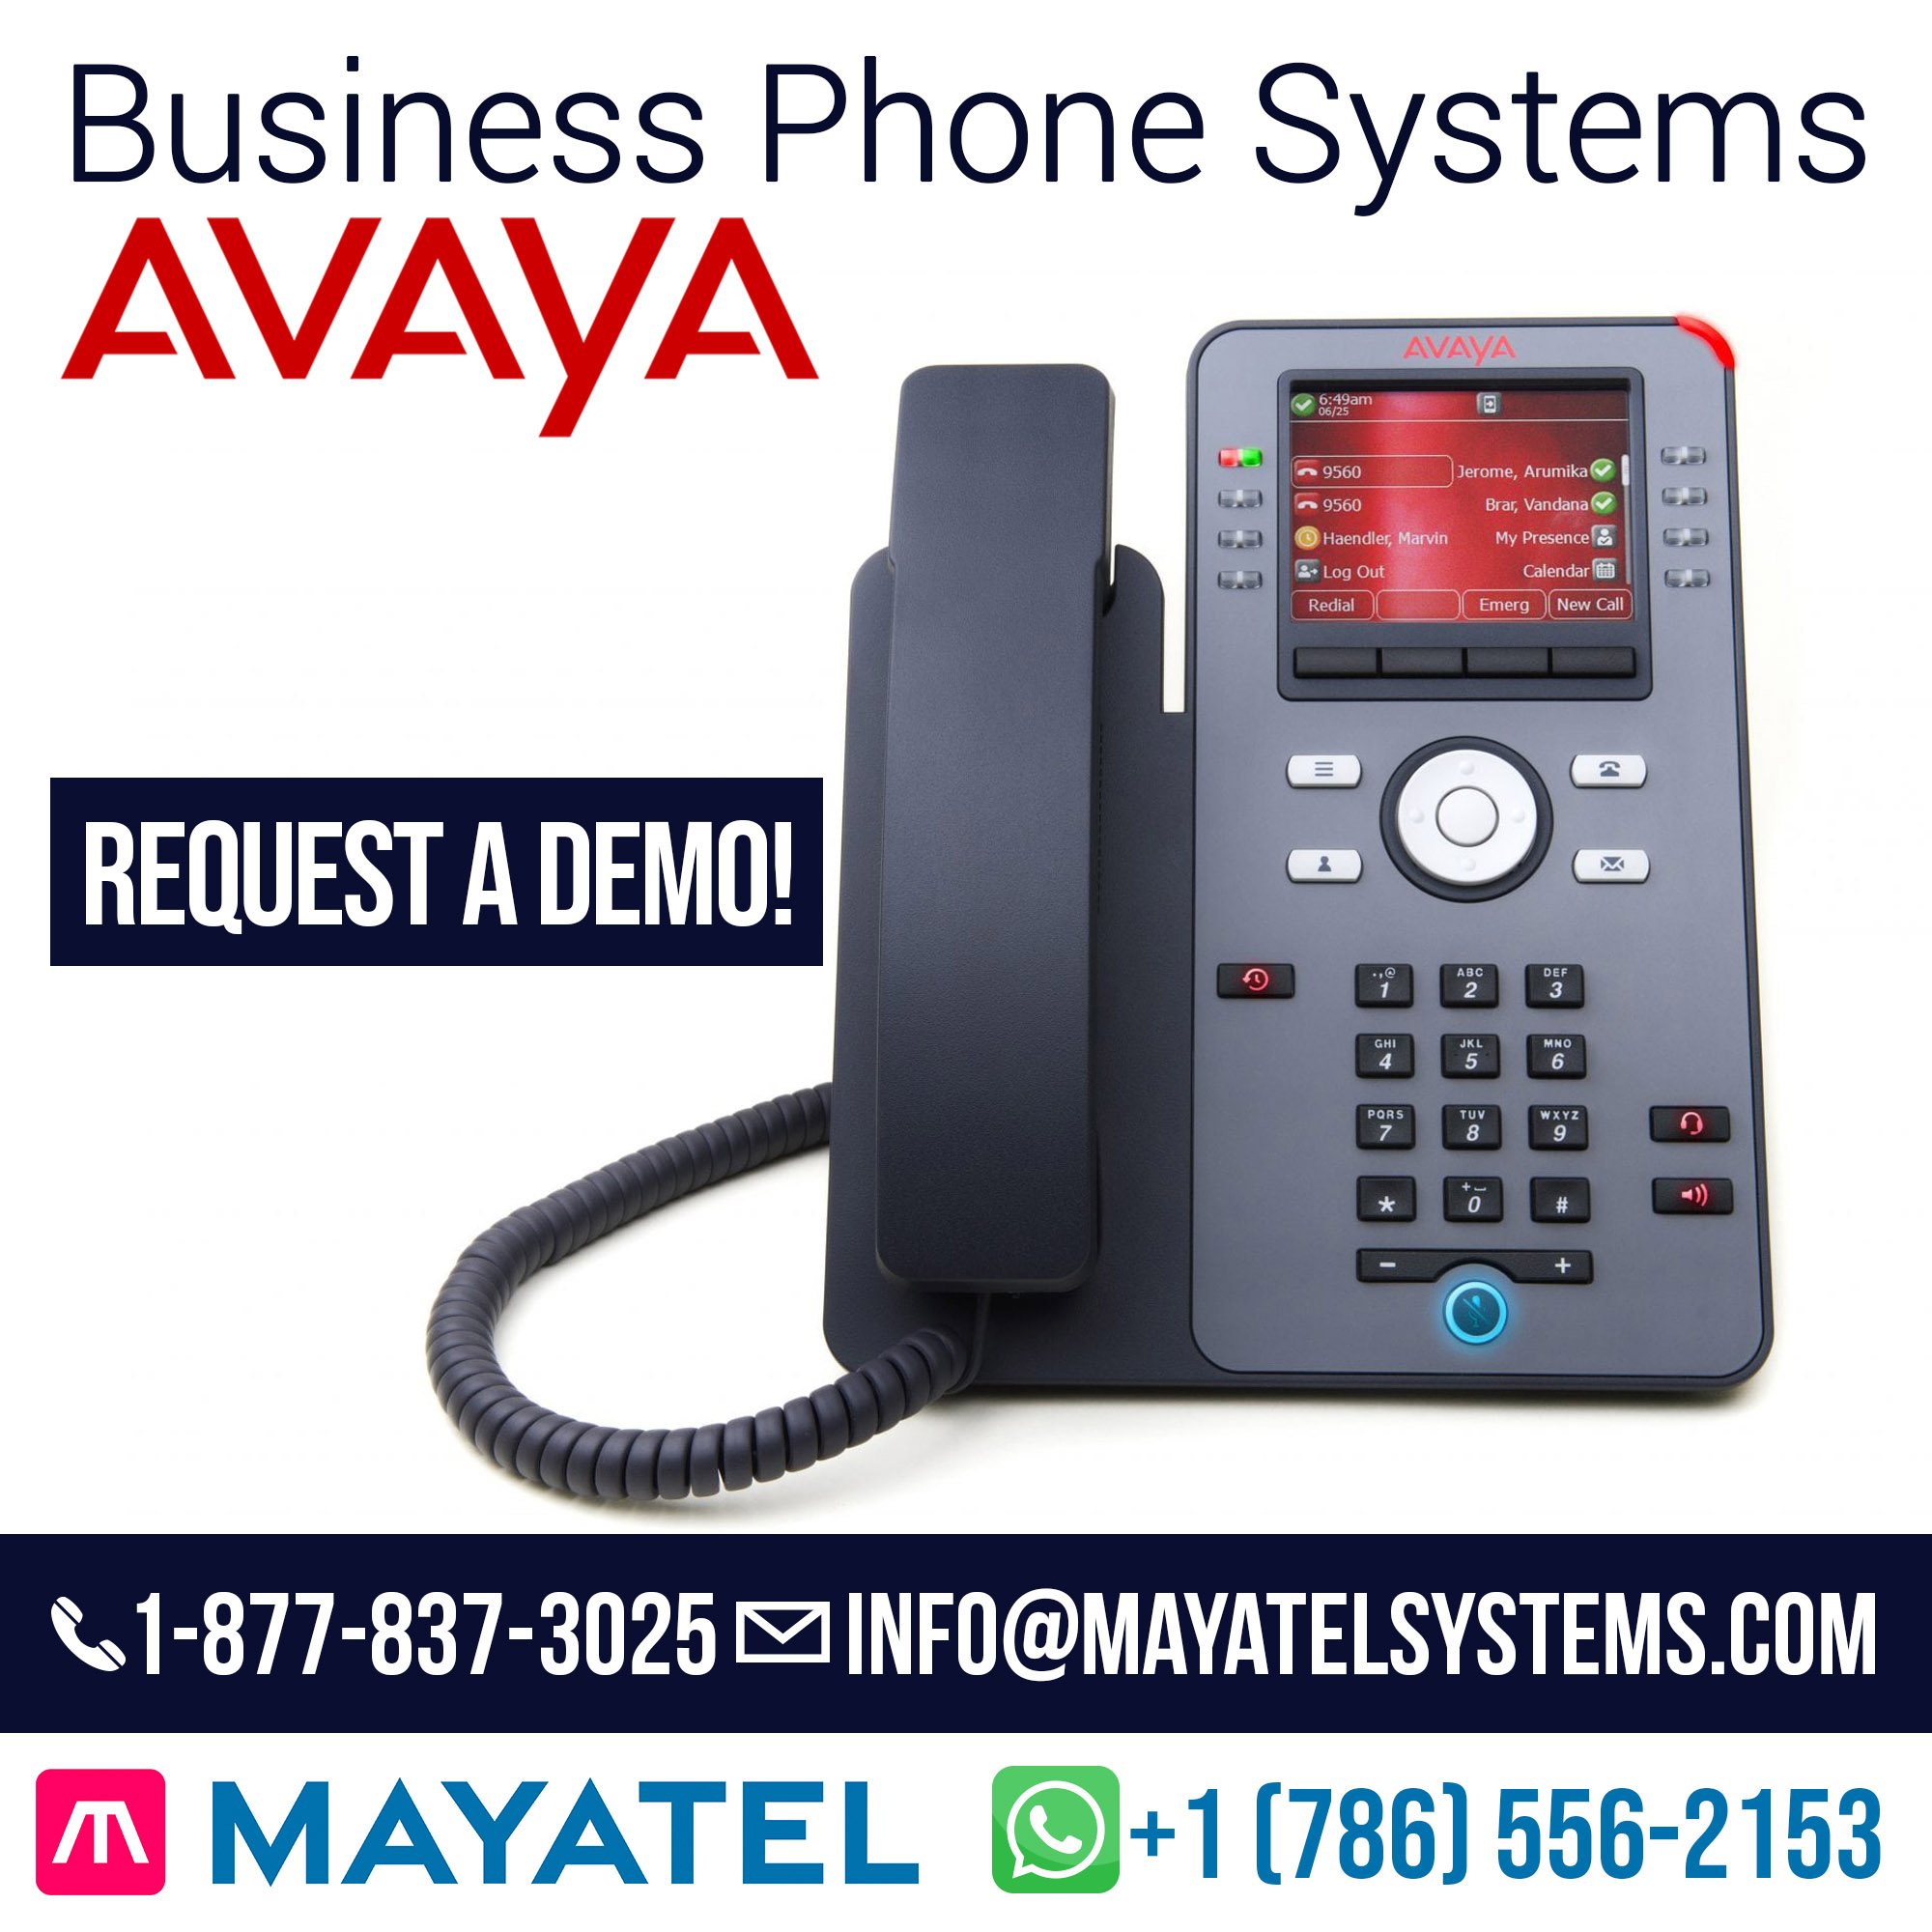 Avaya Business Phone Systems